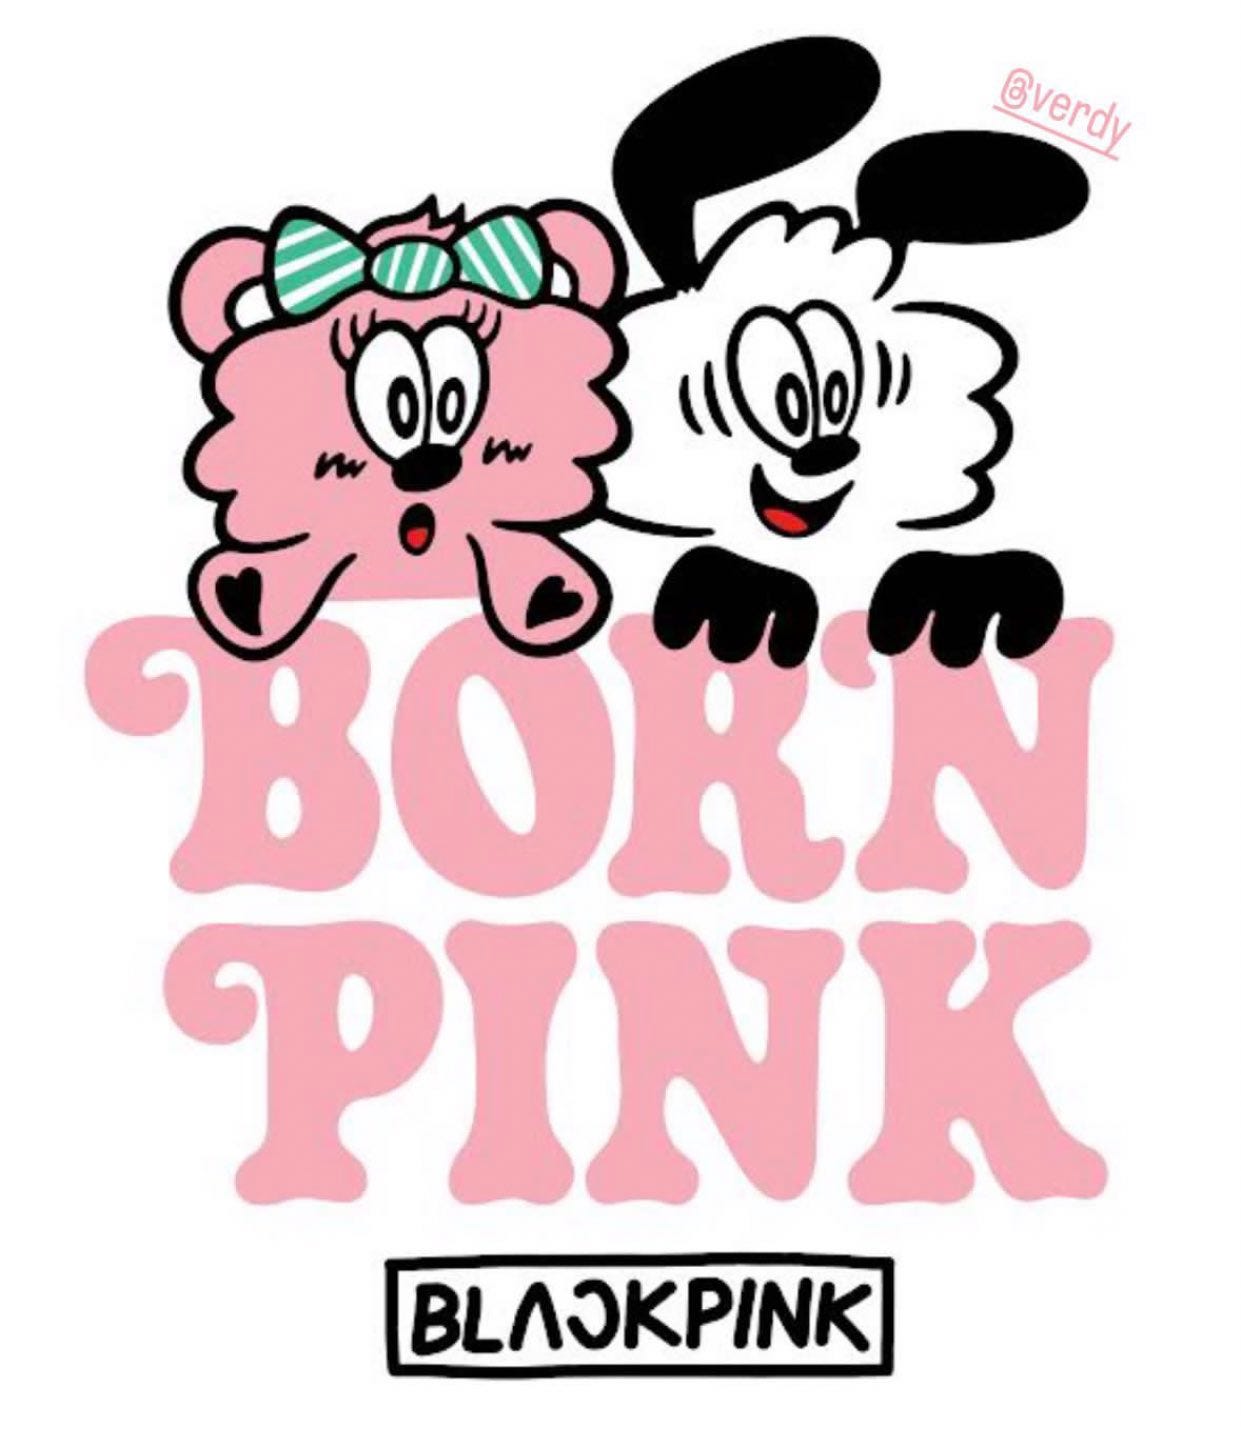 BLACKPINK's Seoul pop-up store experience is happening in mid-September  2023, by Celeste Elle